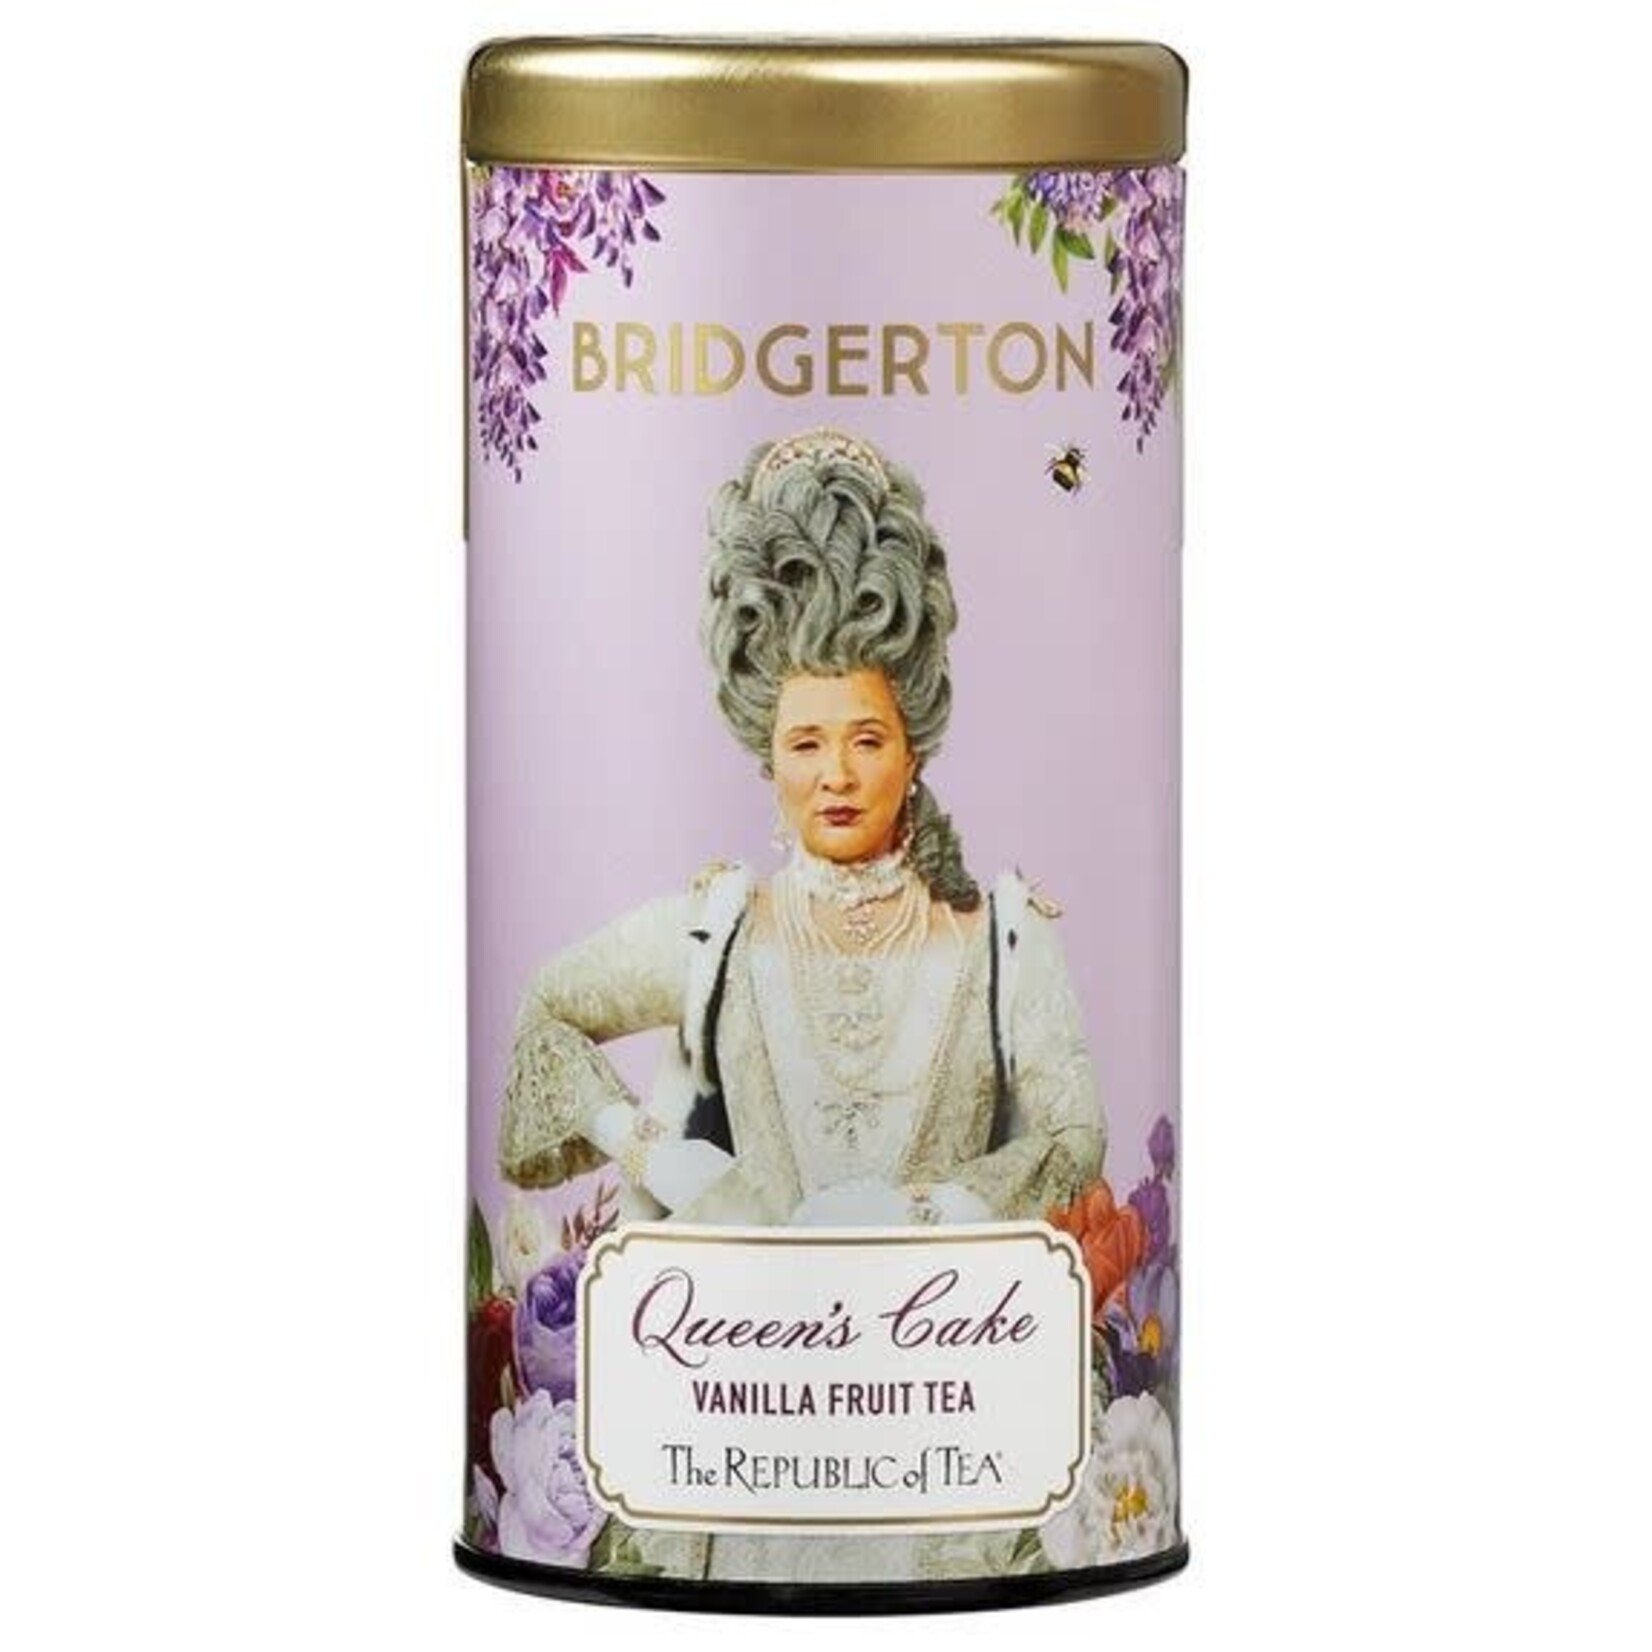 The Republic of Tea Tea: Queen's Cake Vanilla Fruit Tea (36 Tea Bags)